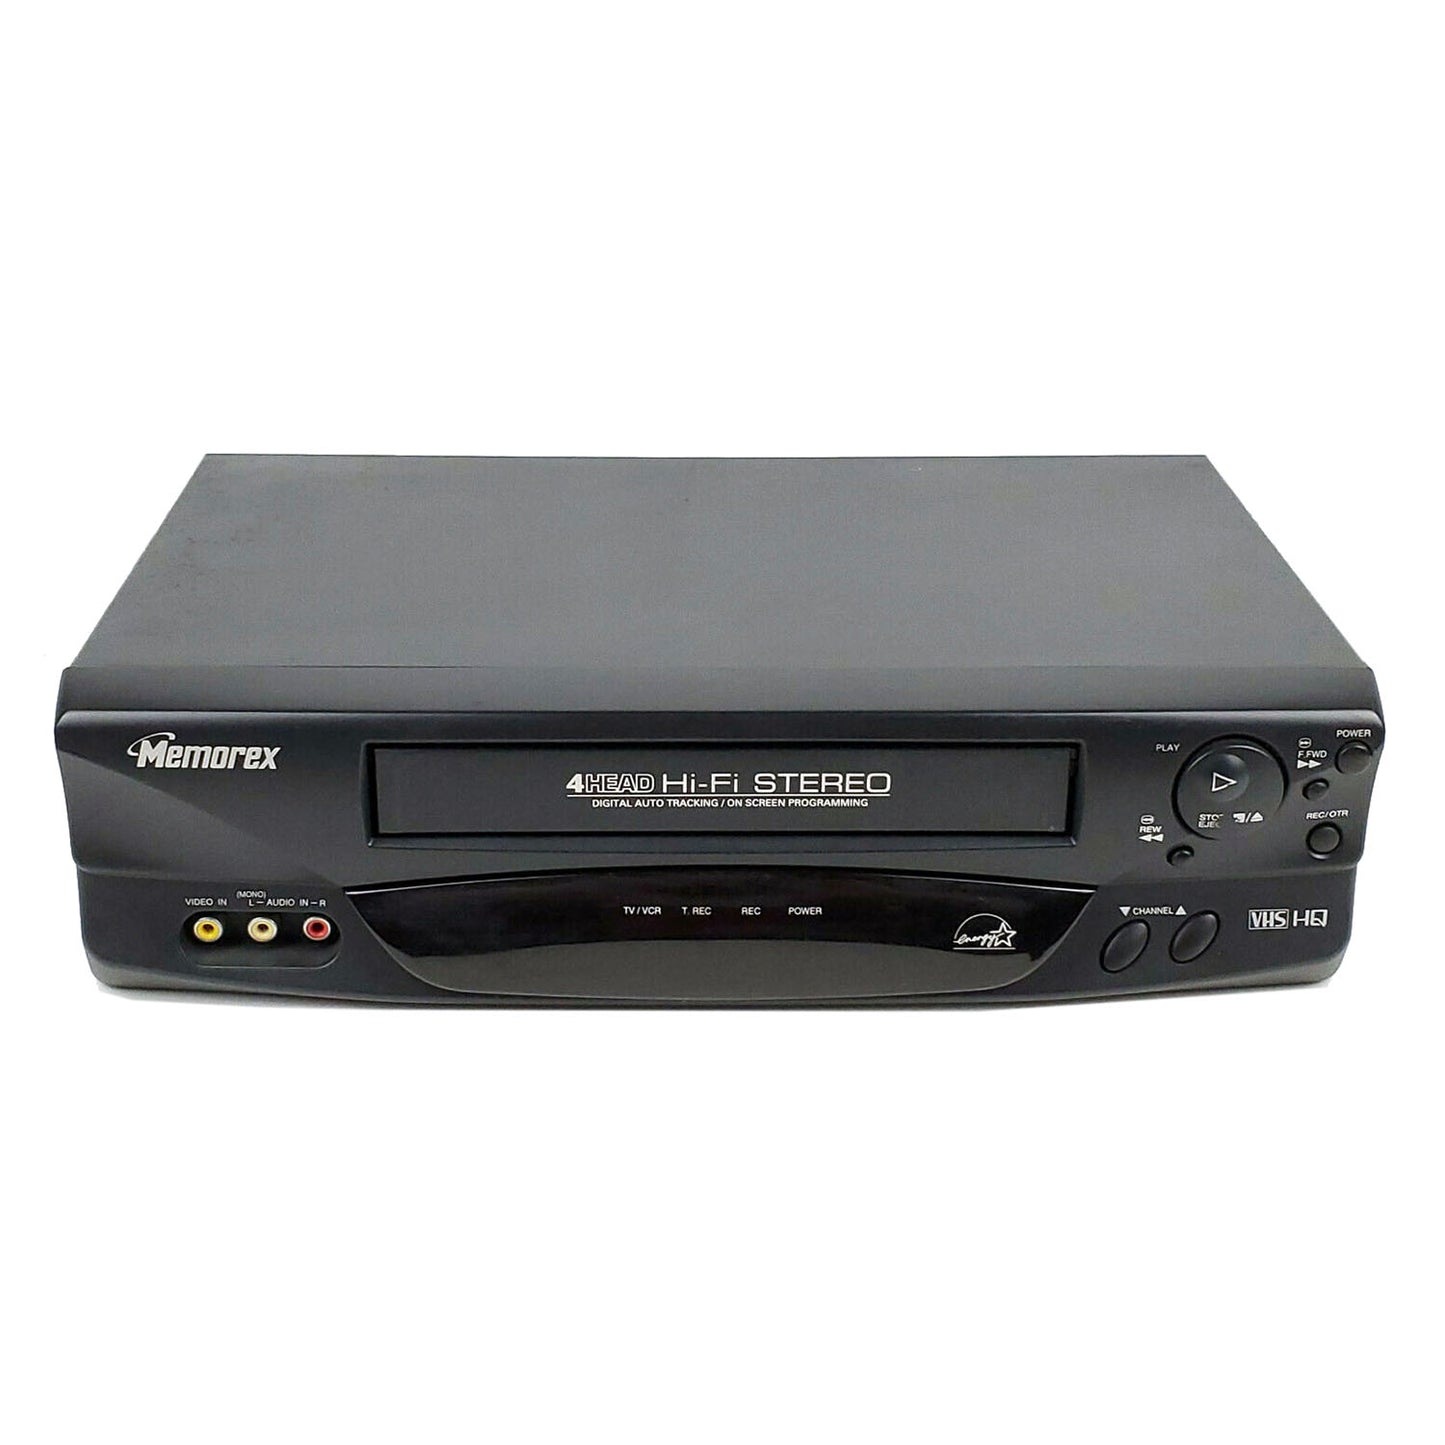 Memorex MVR4052 VCR, 4-Head Hi-Fi Stereo